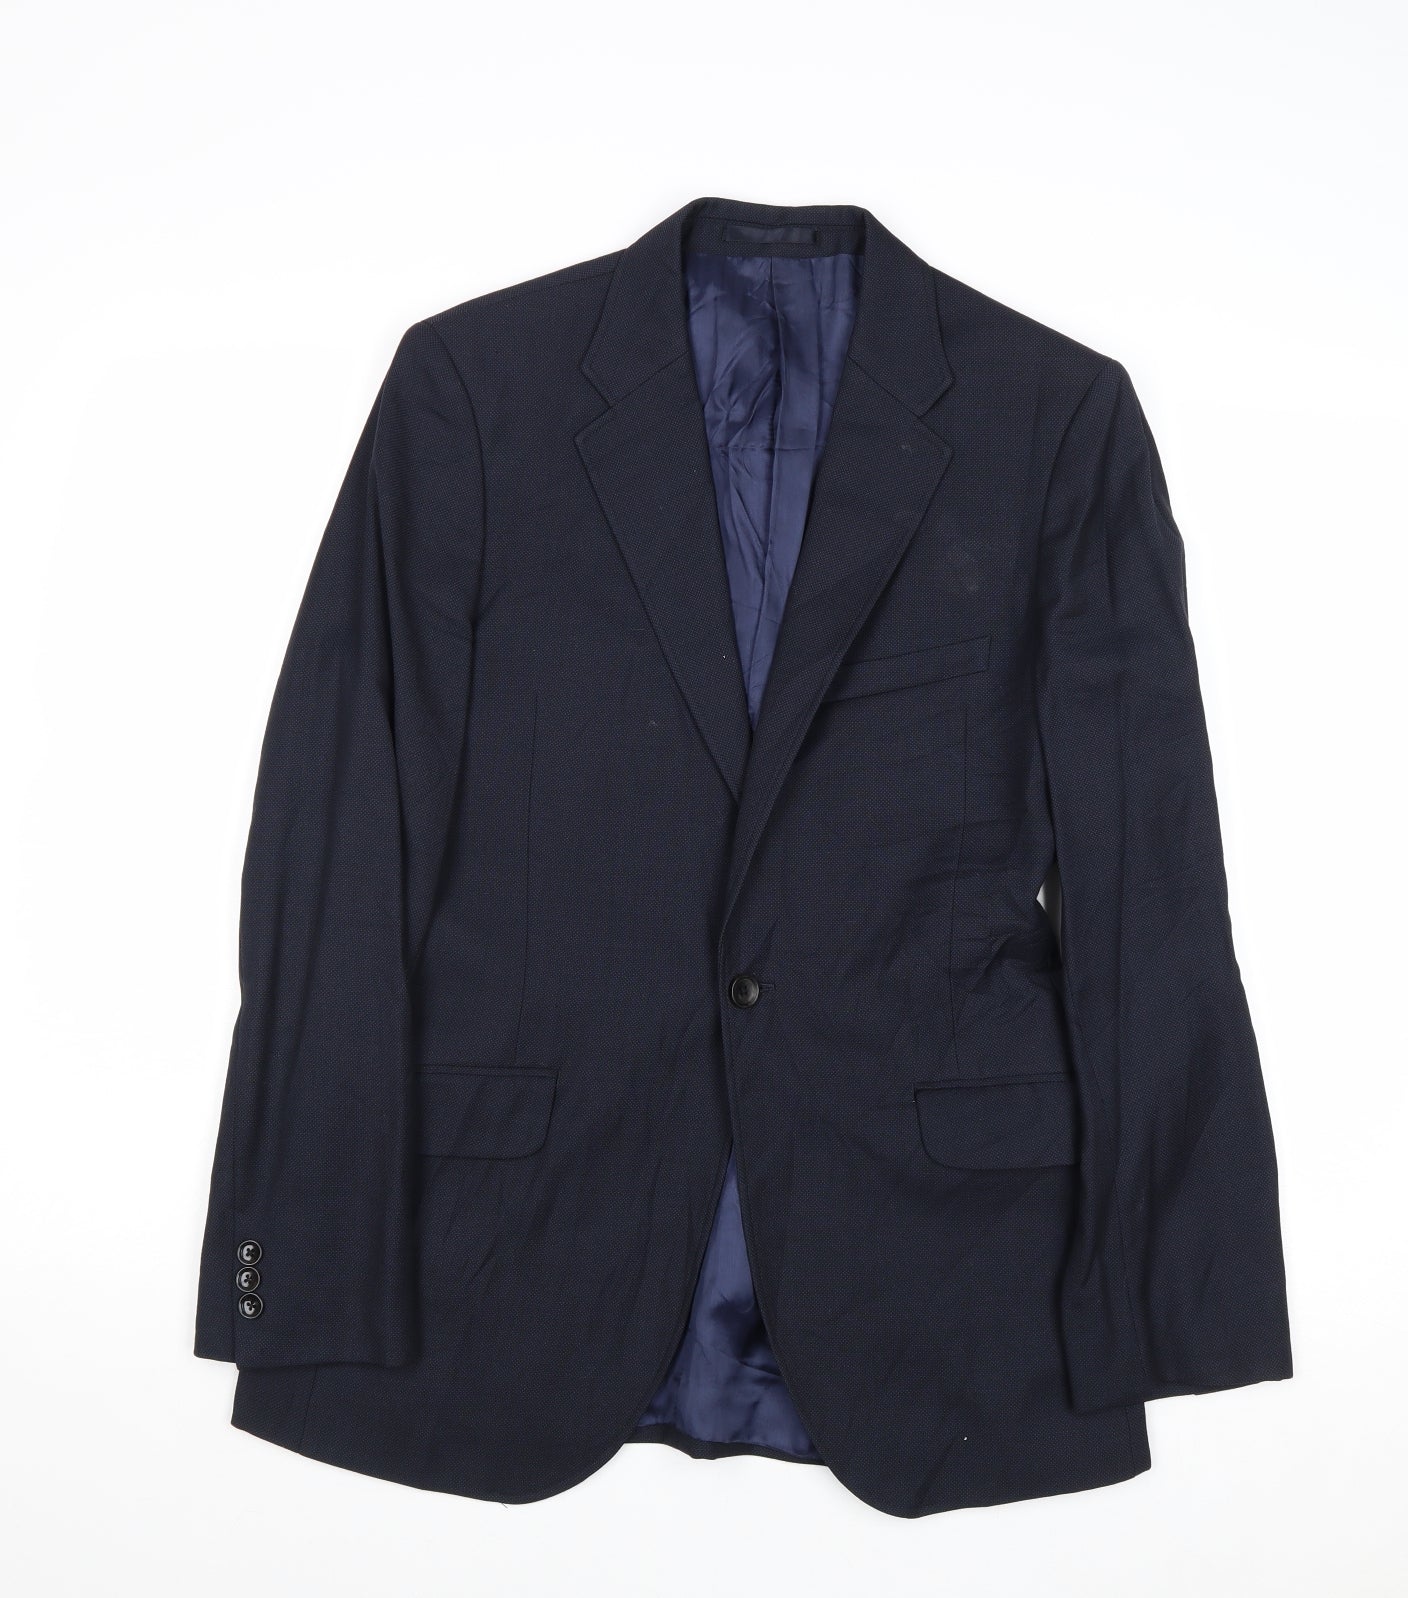 Reiss Mens Blue Wool Jacket Suit Jacket Size 36 Regular